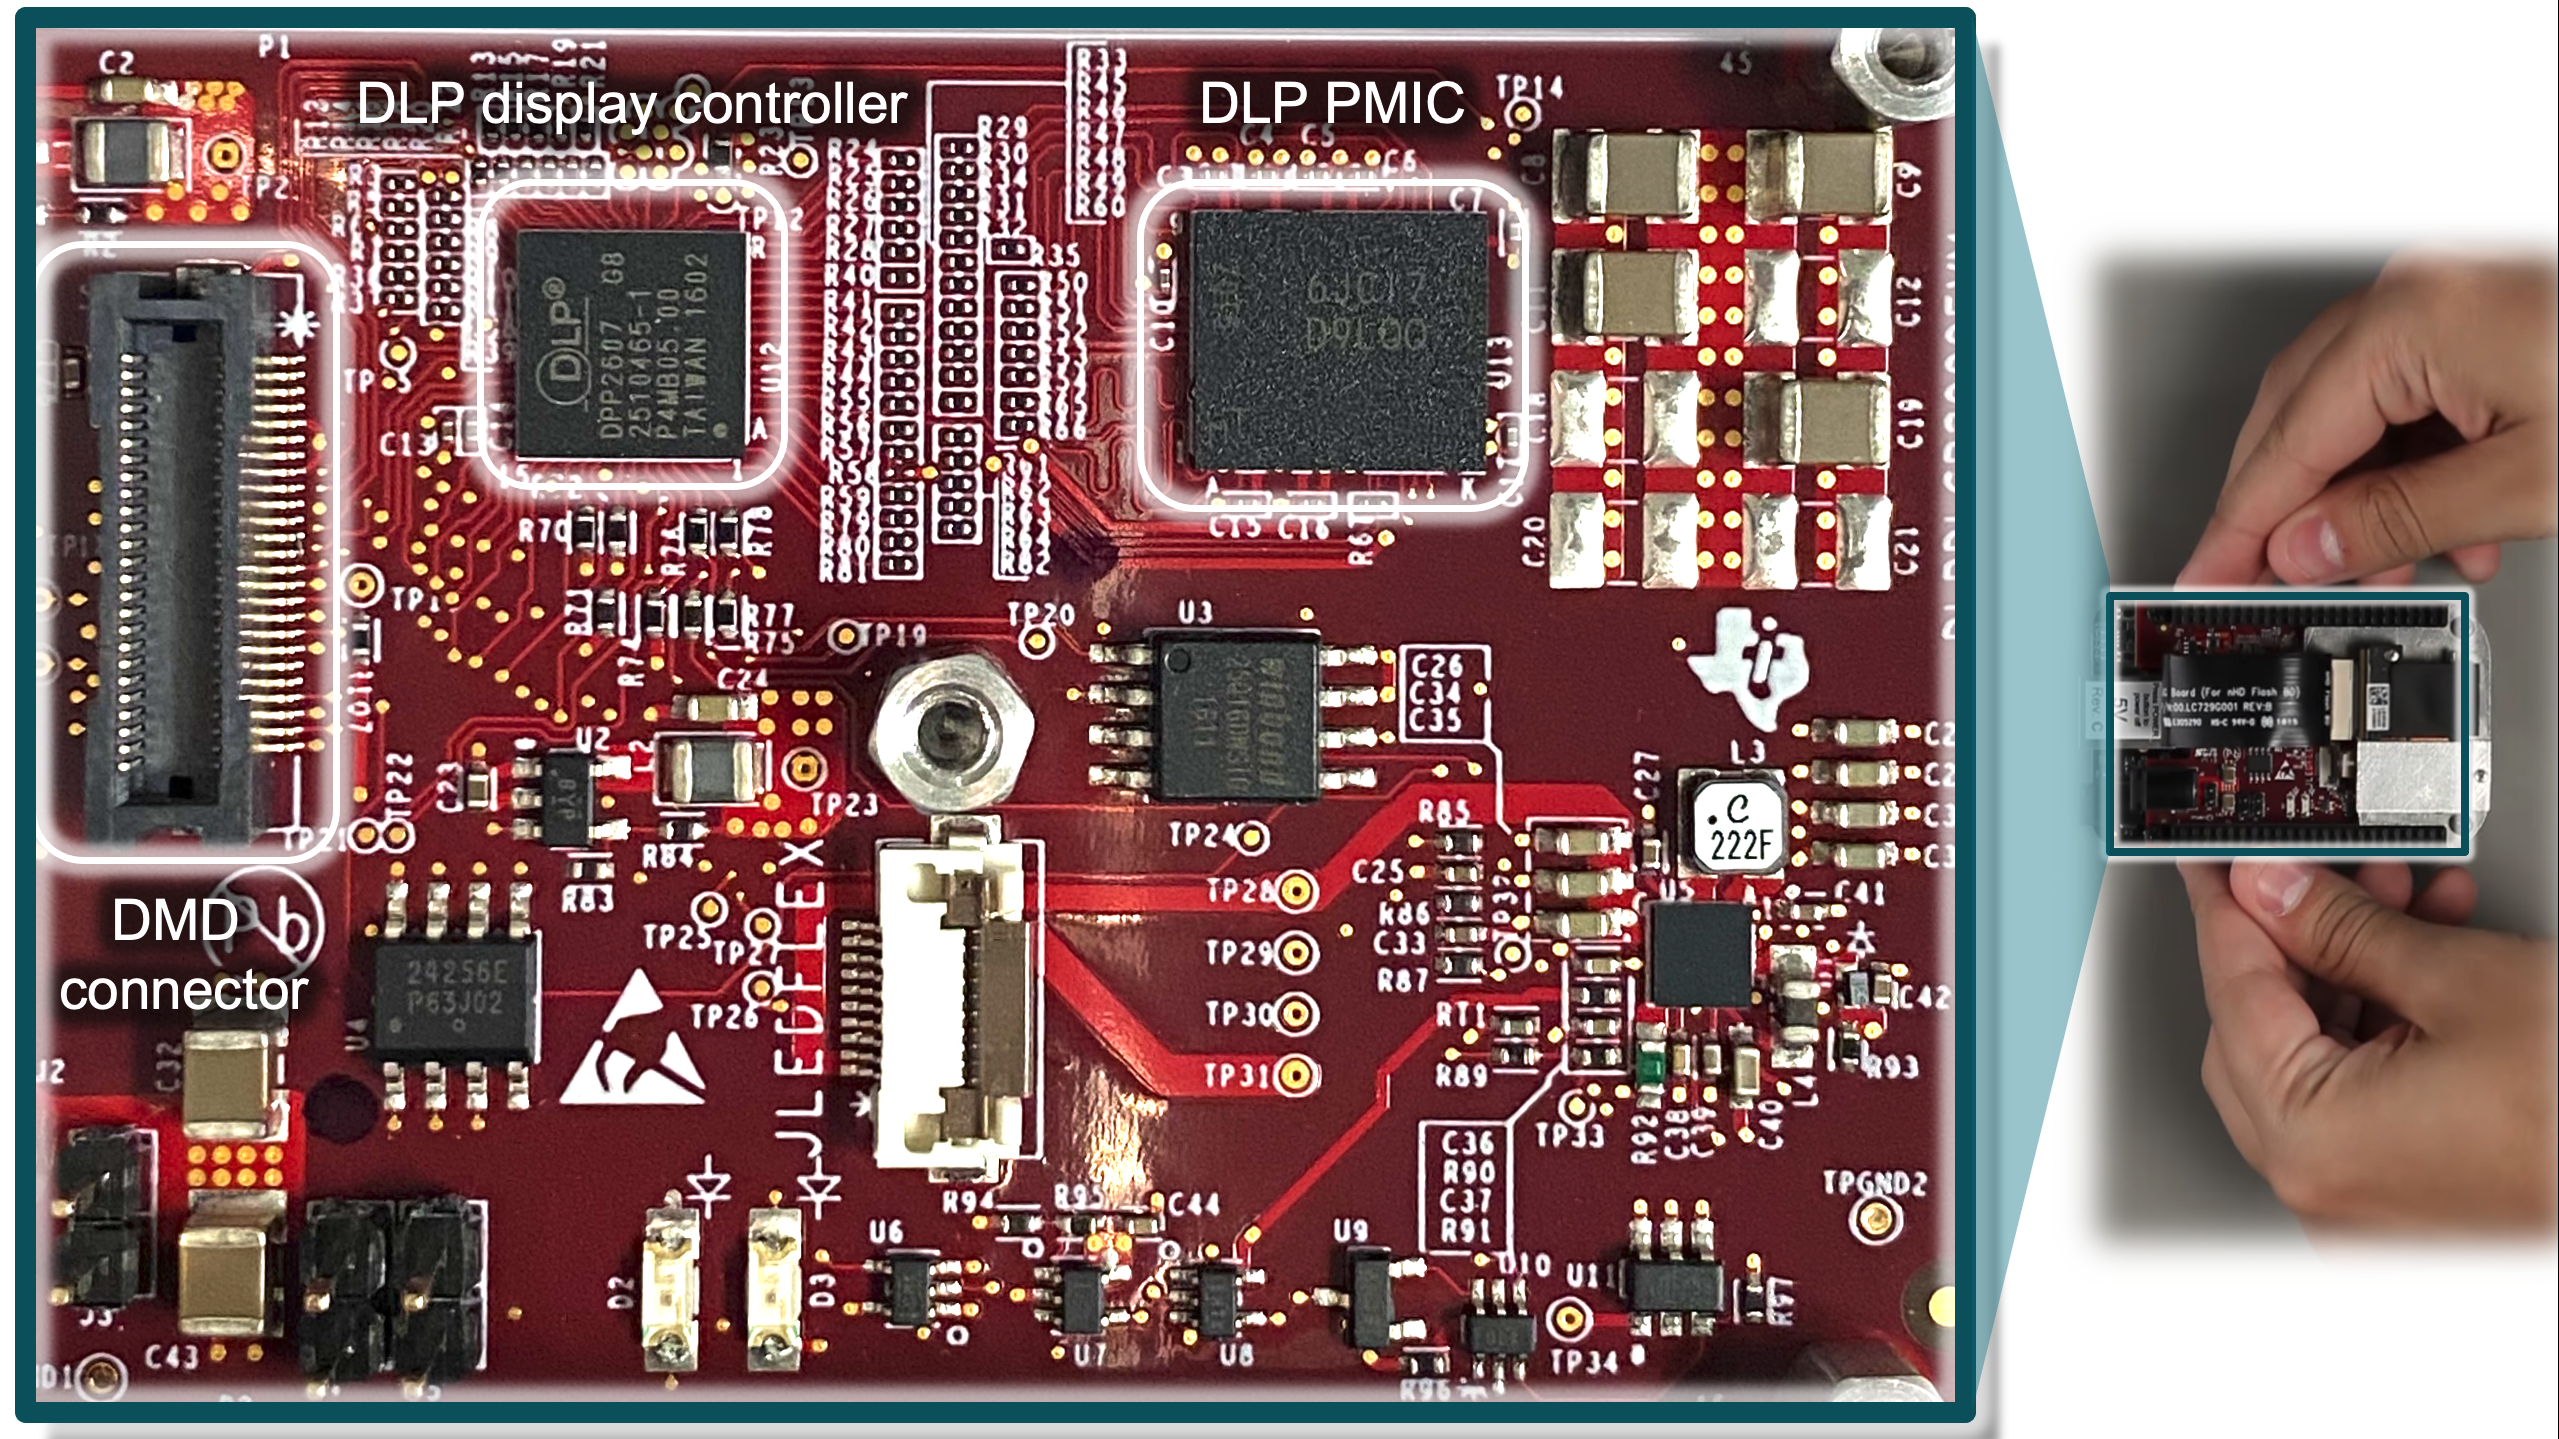  DLP .2 nHD (DLP2000) 칩셋 평가 모듈(EVM) 전자 장치